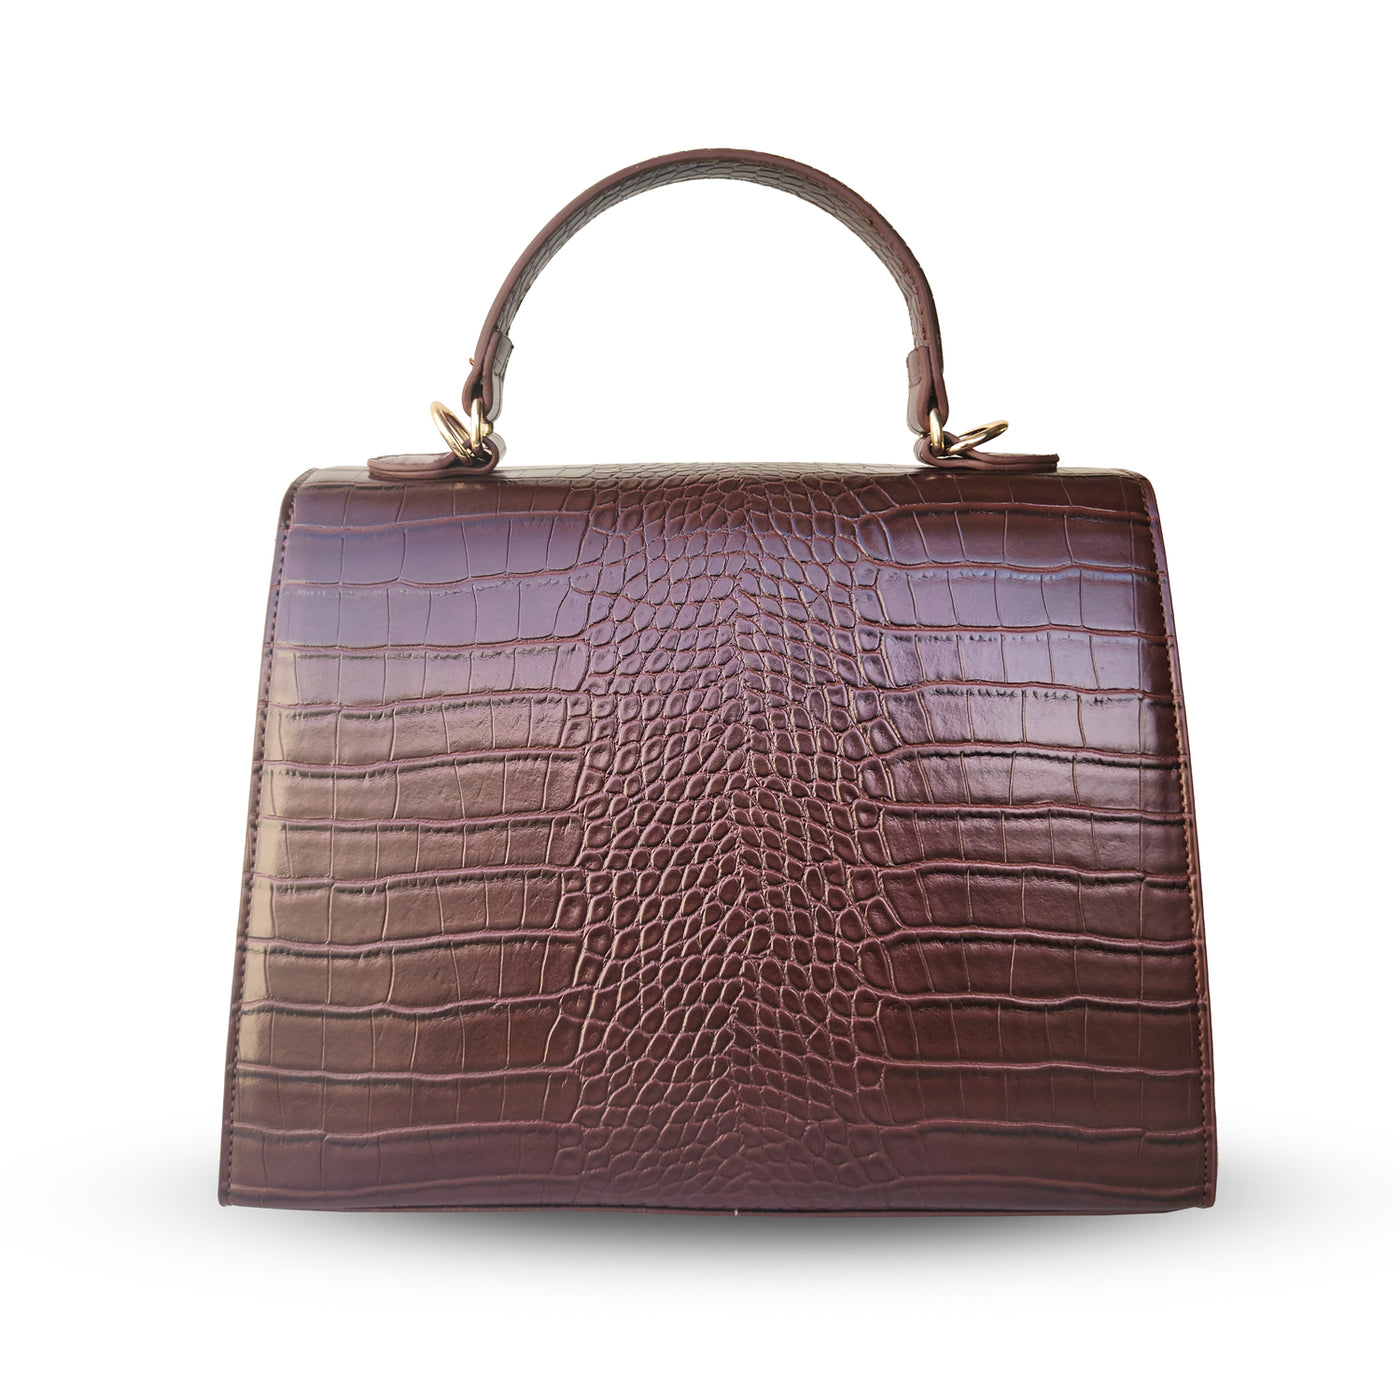 Charlie Stone Vintage Inspired Handbag Retro 1940’s 1950’s Style Caffe brown Croc Vegan leather